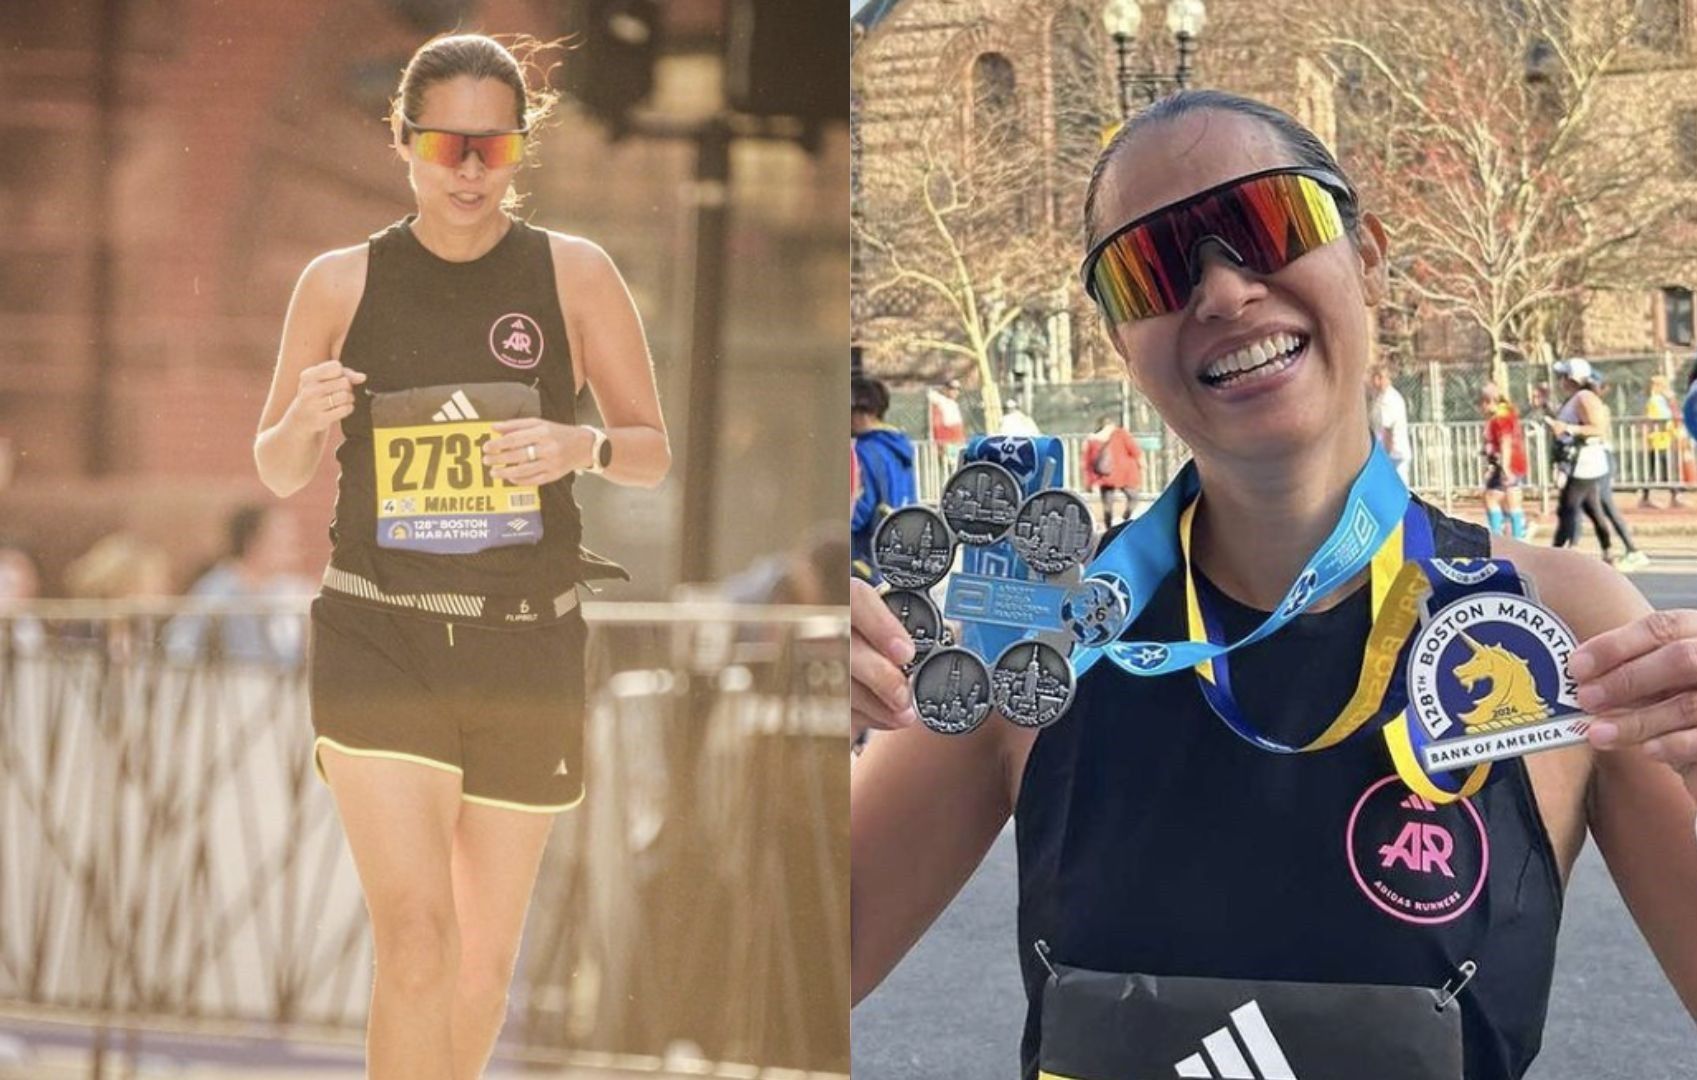 Maricel Laxa earns Six Star Medal after finishing Boston Marathon at 54